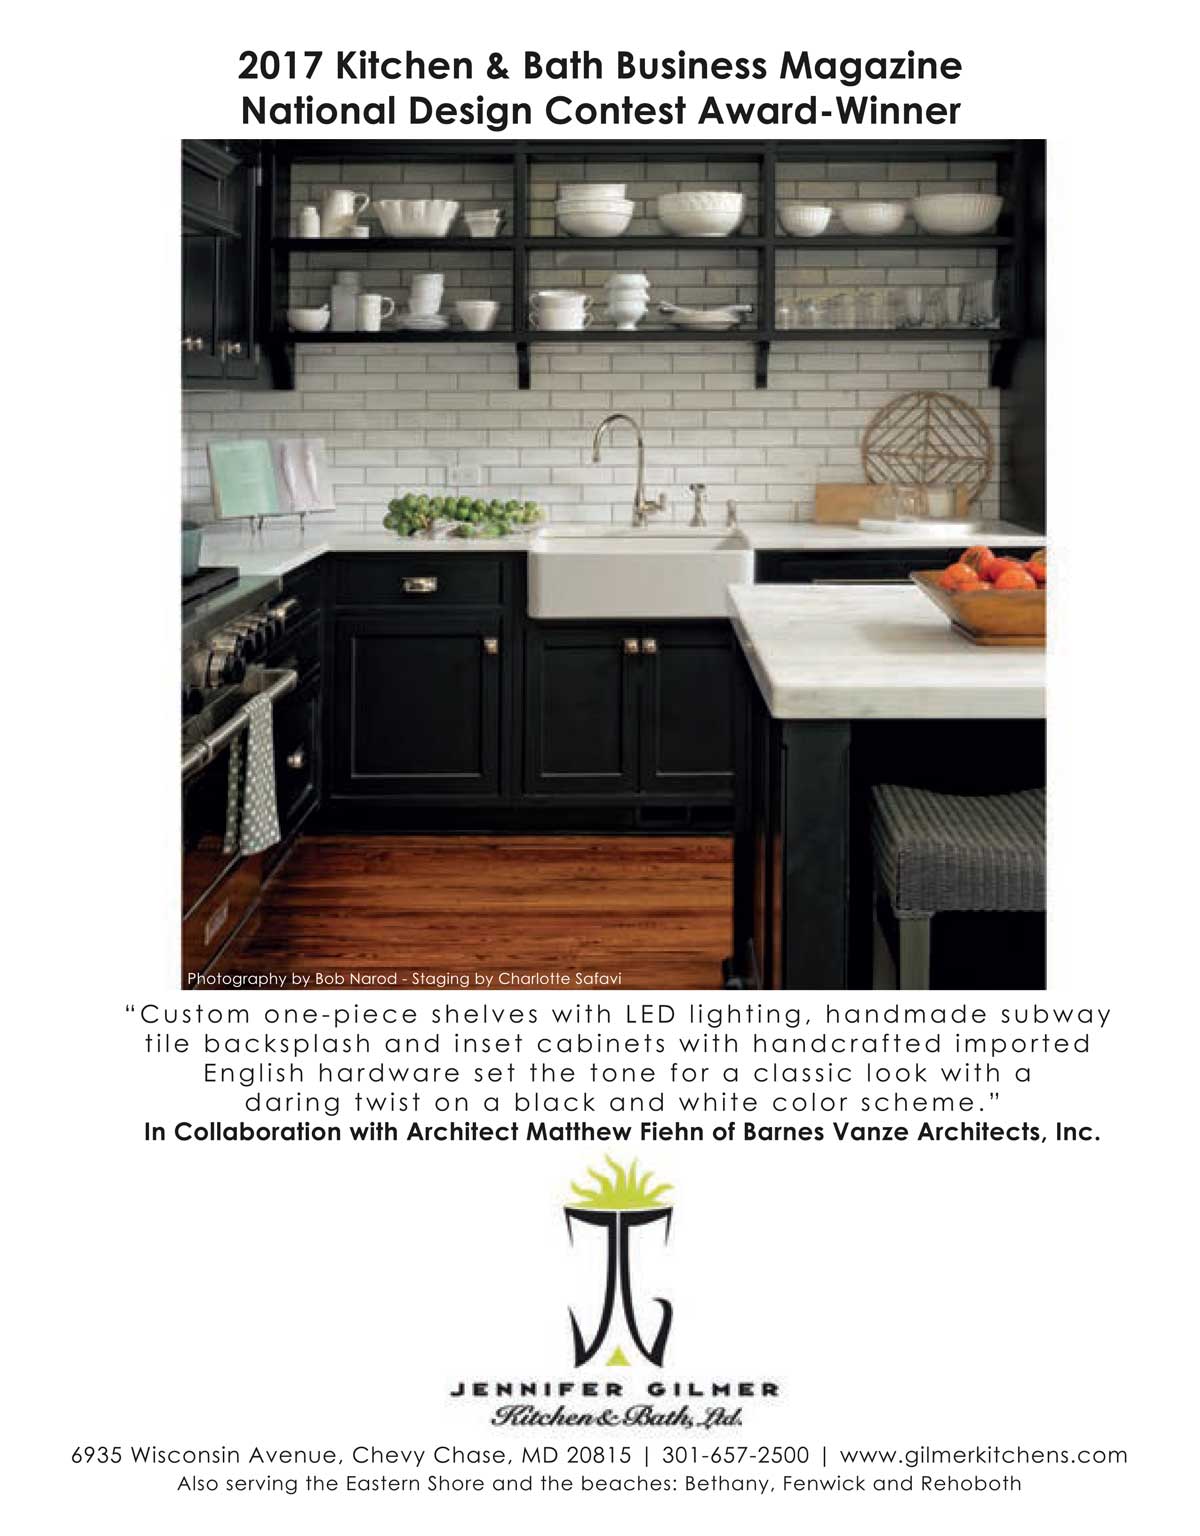 Print Ad for Jennifer Gilmer Kitchen and Bath